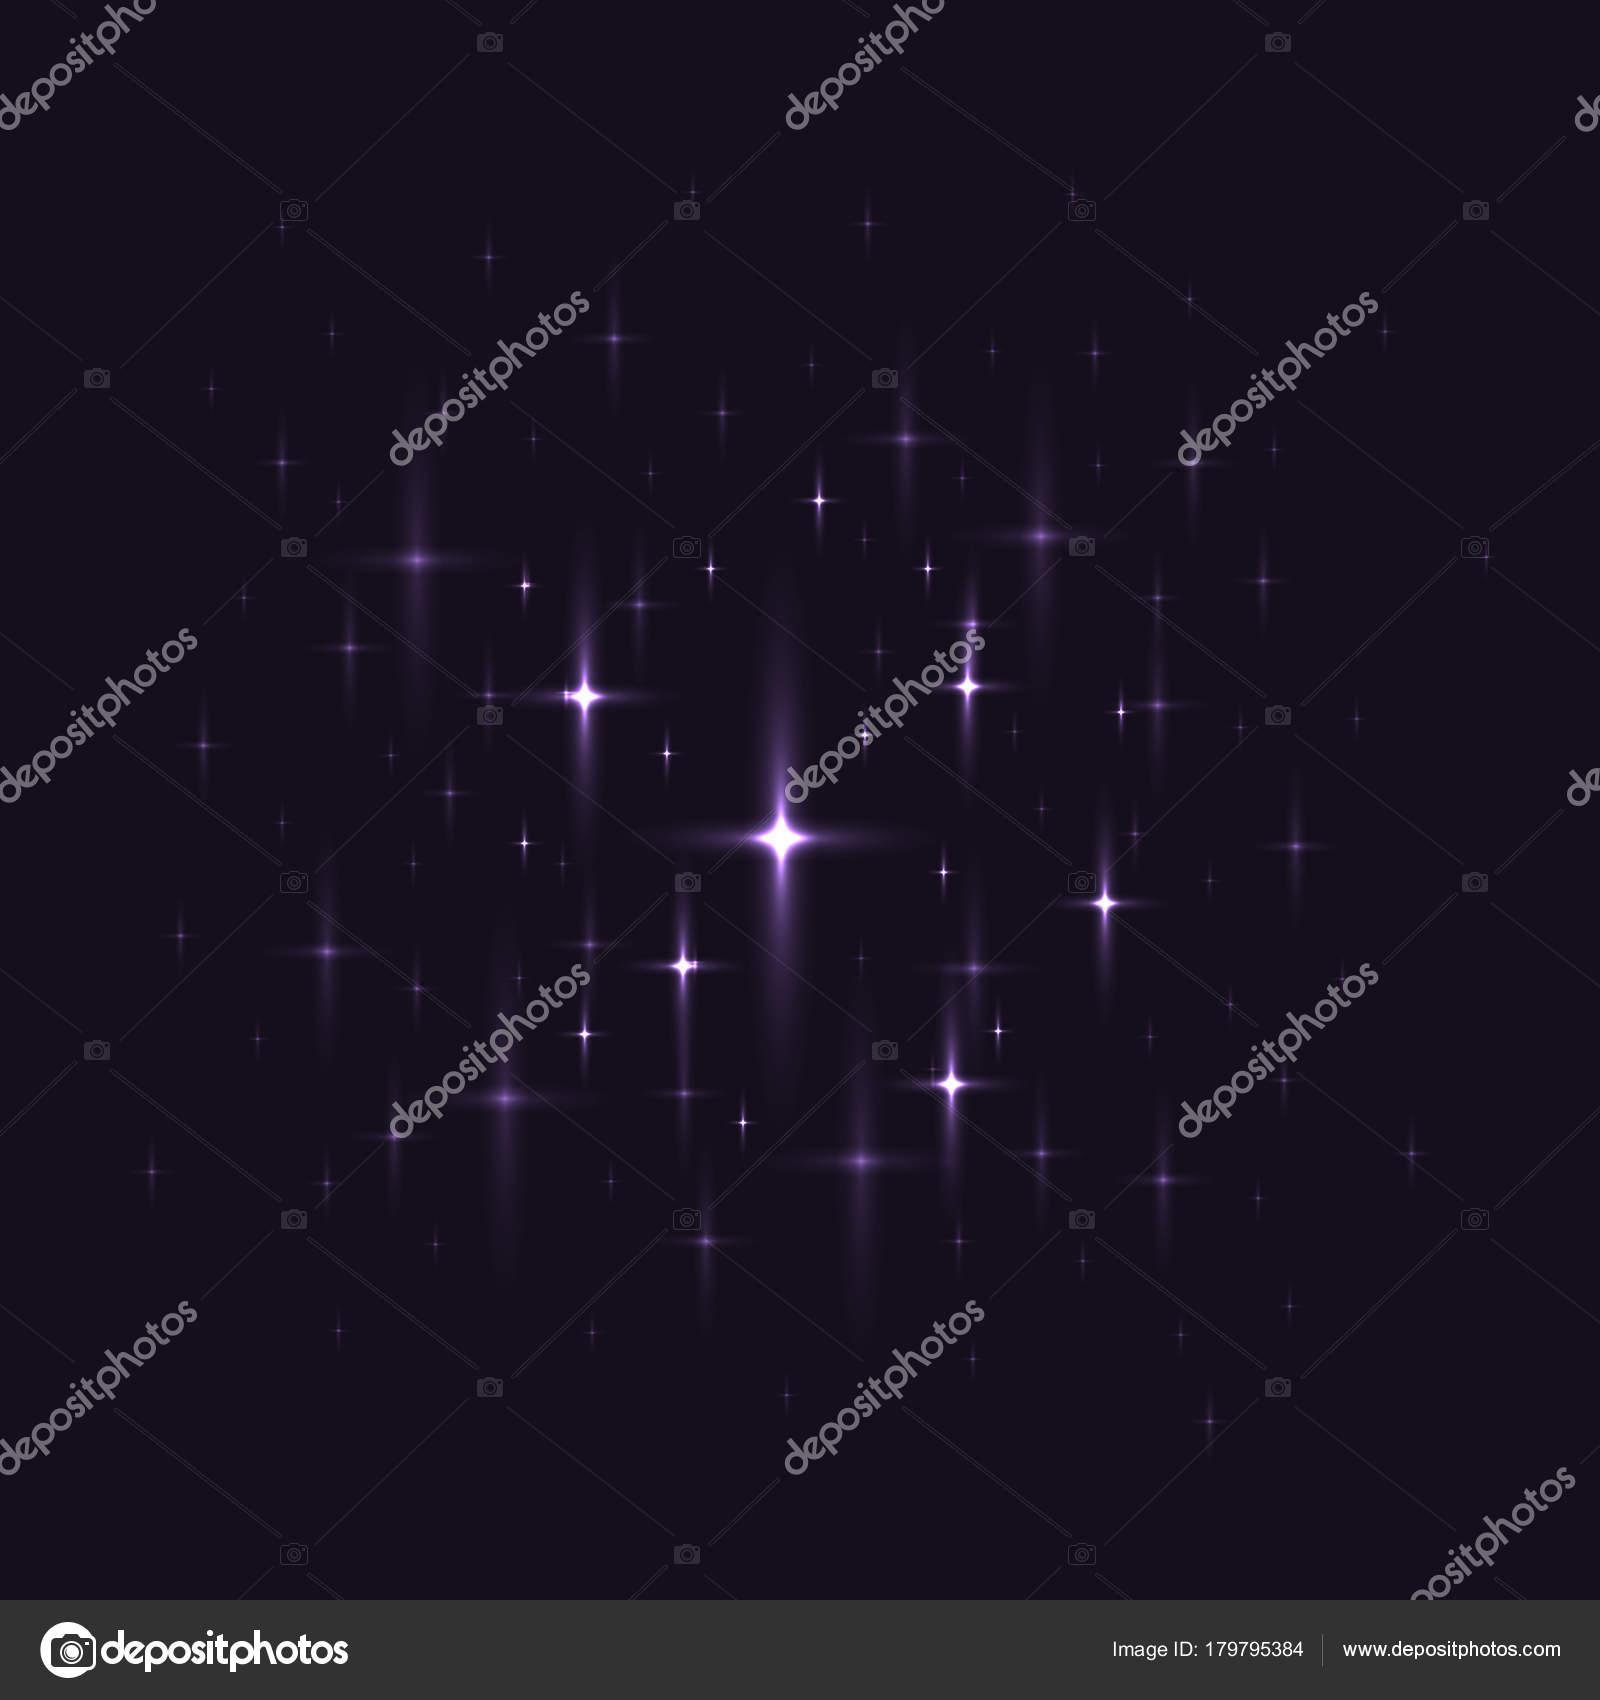 Black Wallpaper With Stars Black Background Night Sky Stars Vector Pattern Wrapping Paper Wallpaper Stock Vector C Veleri